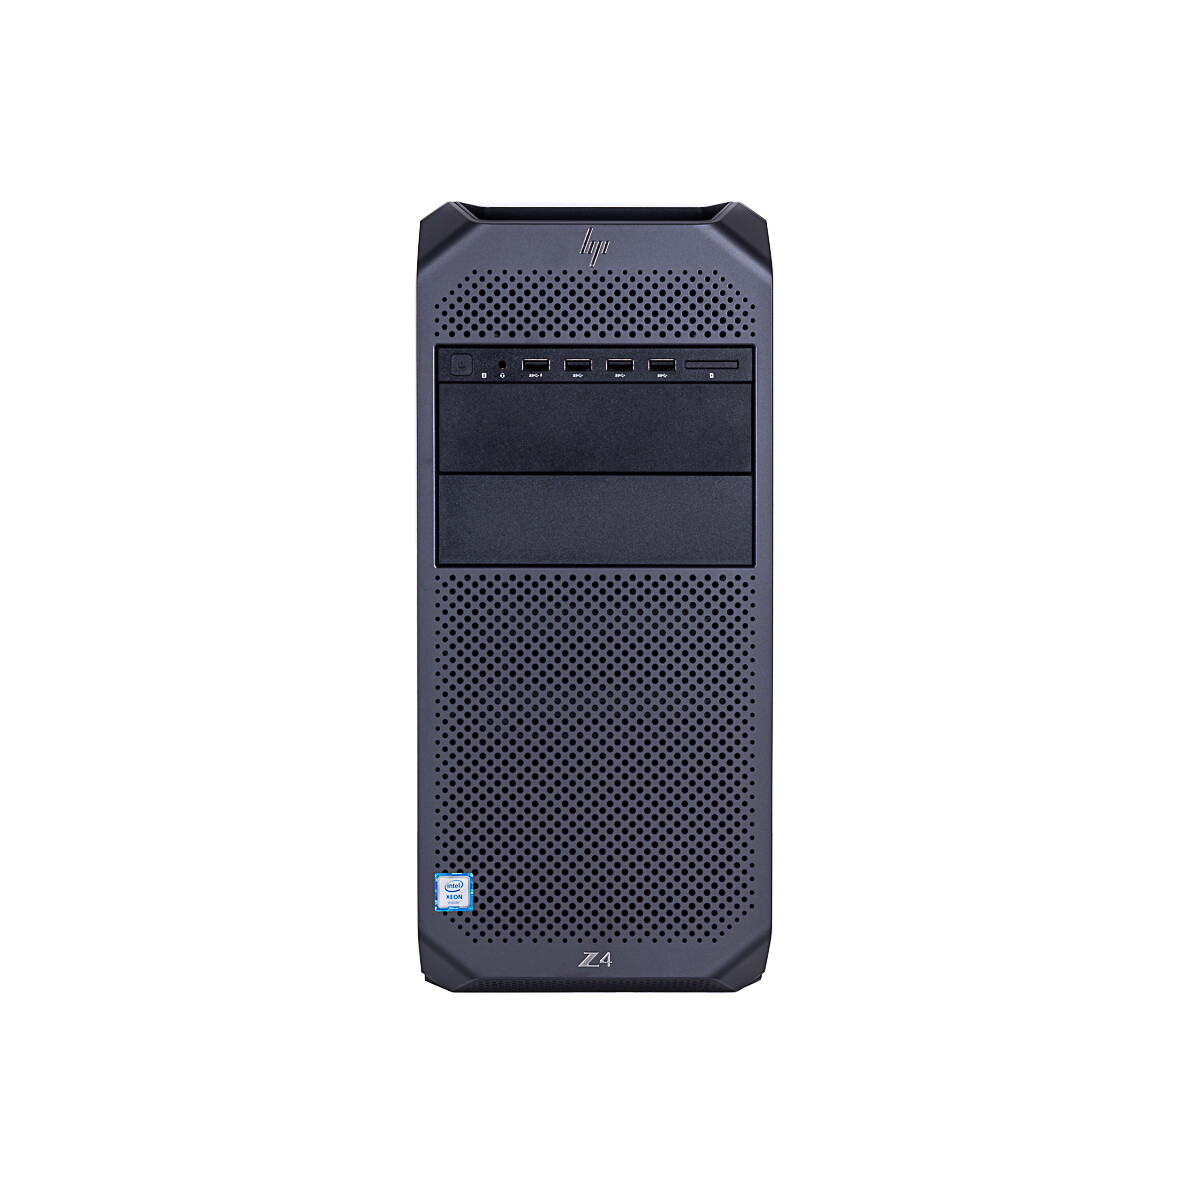 HP Z4 G4 Business Workstation Intel Xeon 14-Core W-2175, max. 4.30GHz, 64GB DDR4, 1TB M.2 NVME SSD (NEU), NVIDIA Quadro RTX A4000, 16GB (NEU), WIN 10 Pro